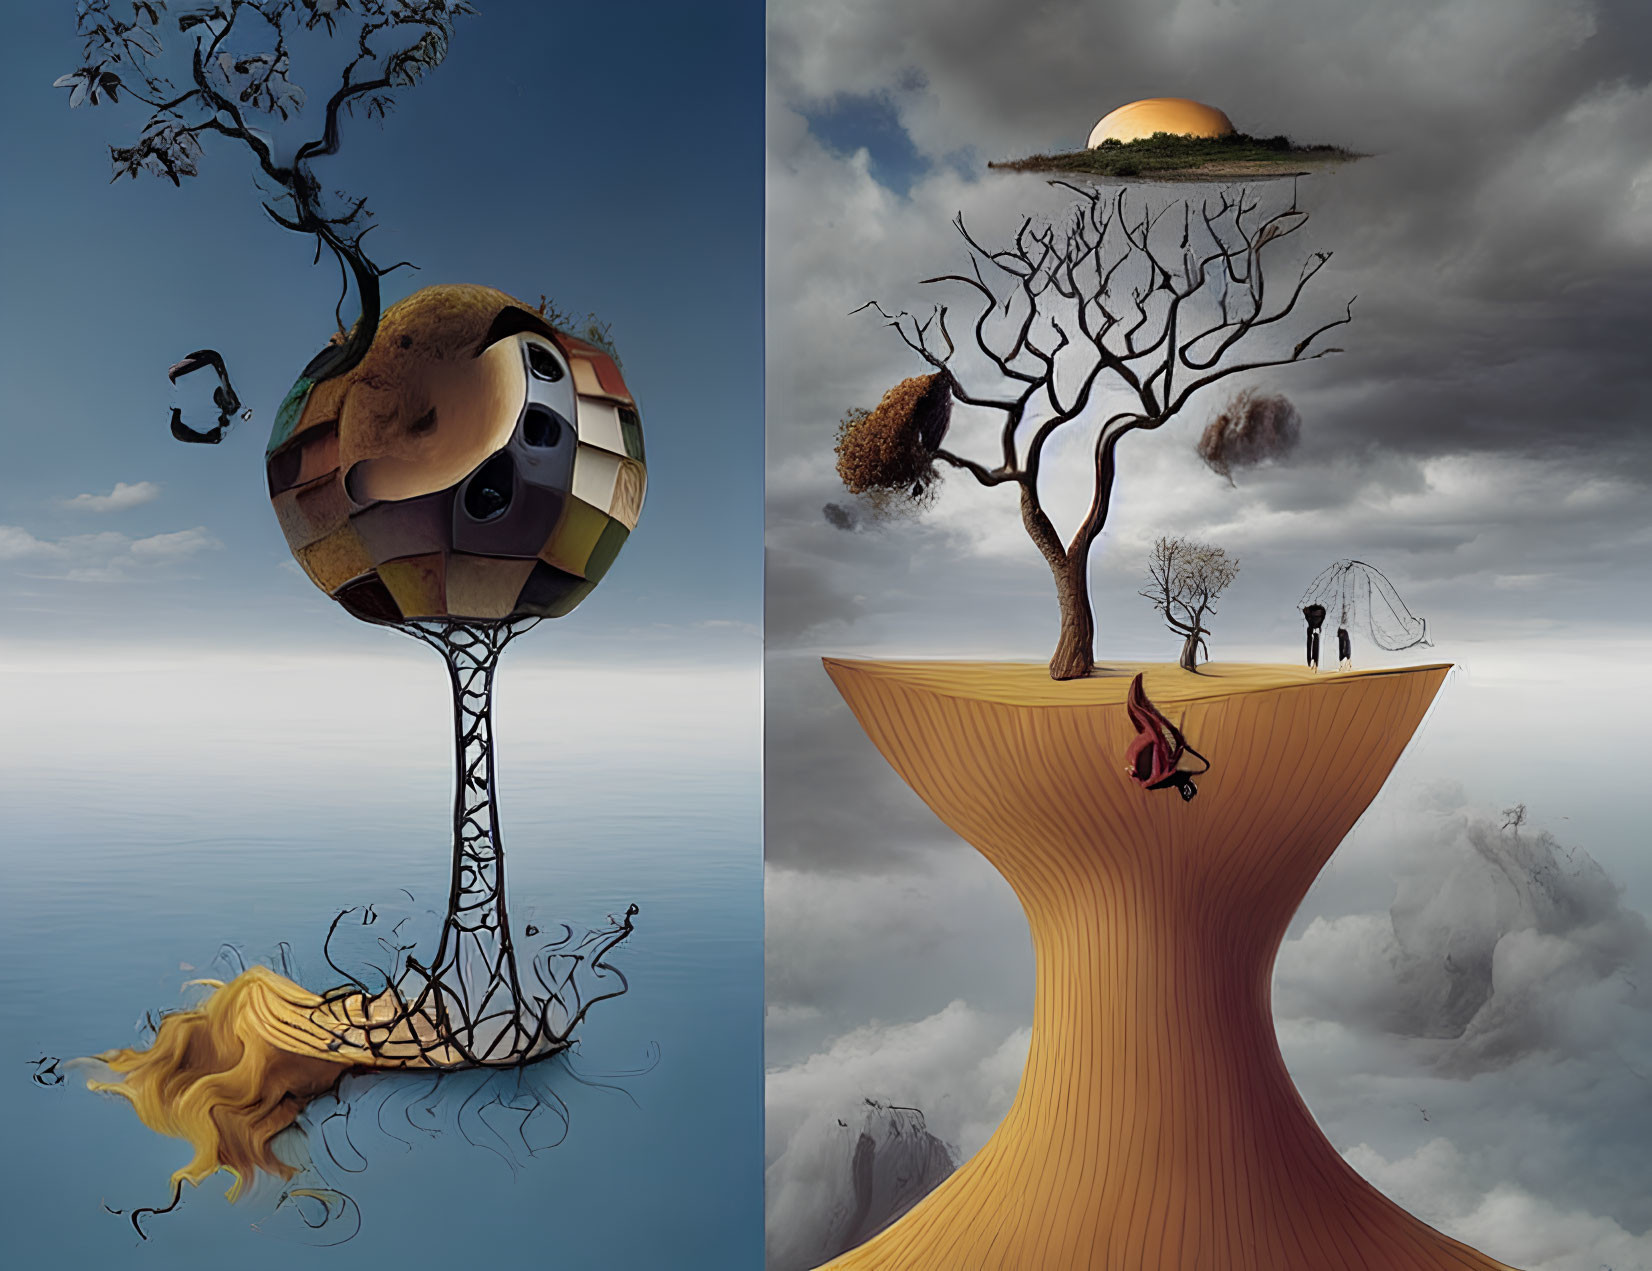 Surreal artwork featuring hut on stilts, twisted tree, floating elements, figure on head-shaped